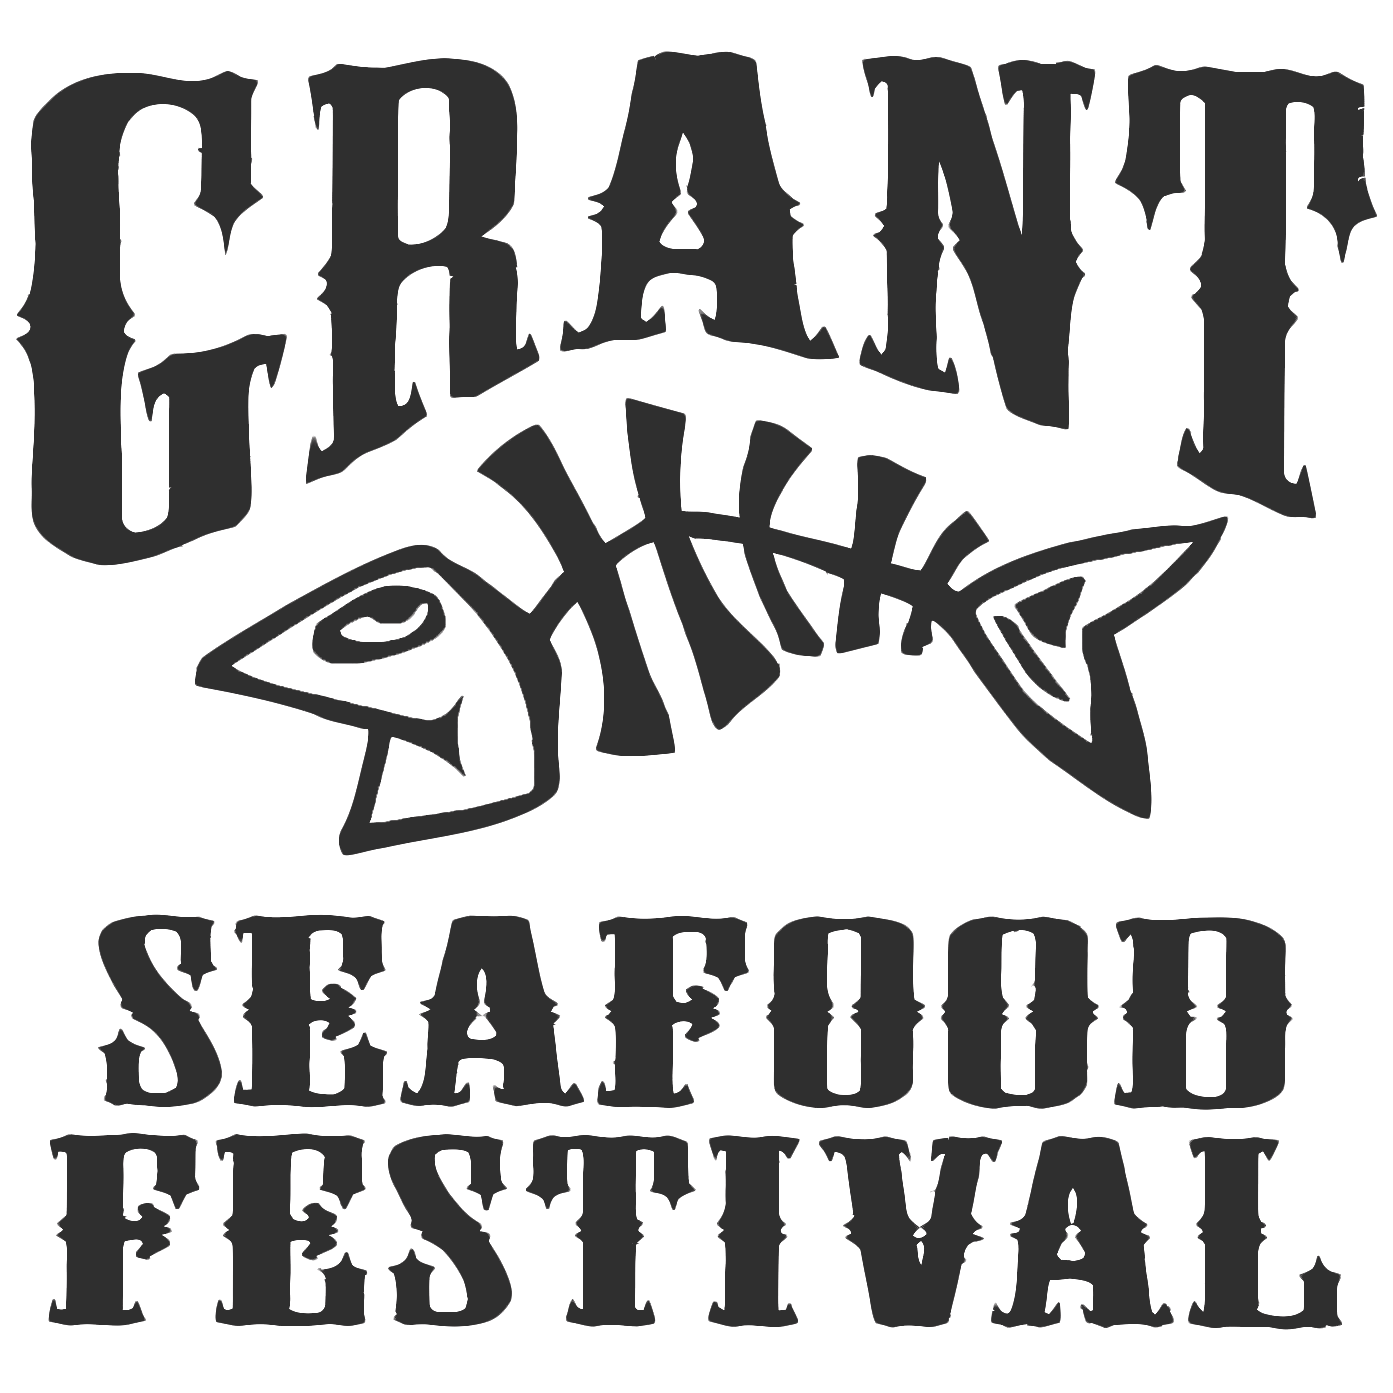 Grant Seafood Festival